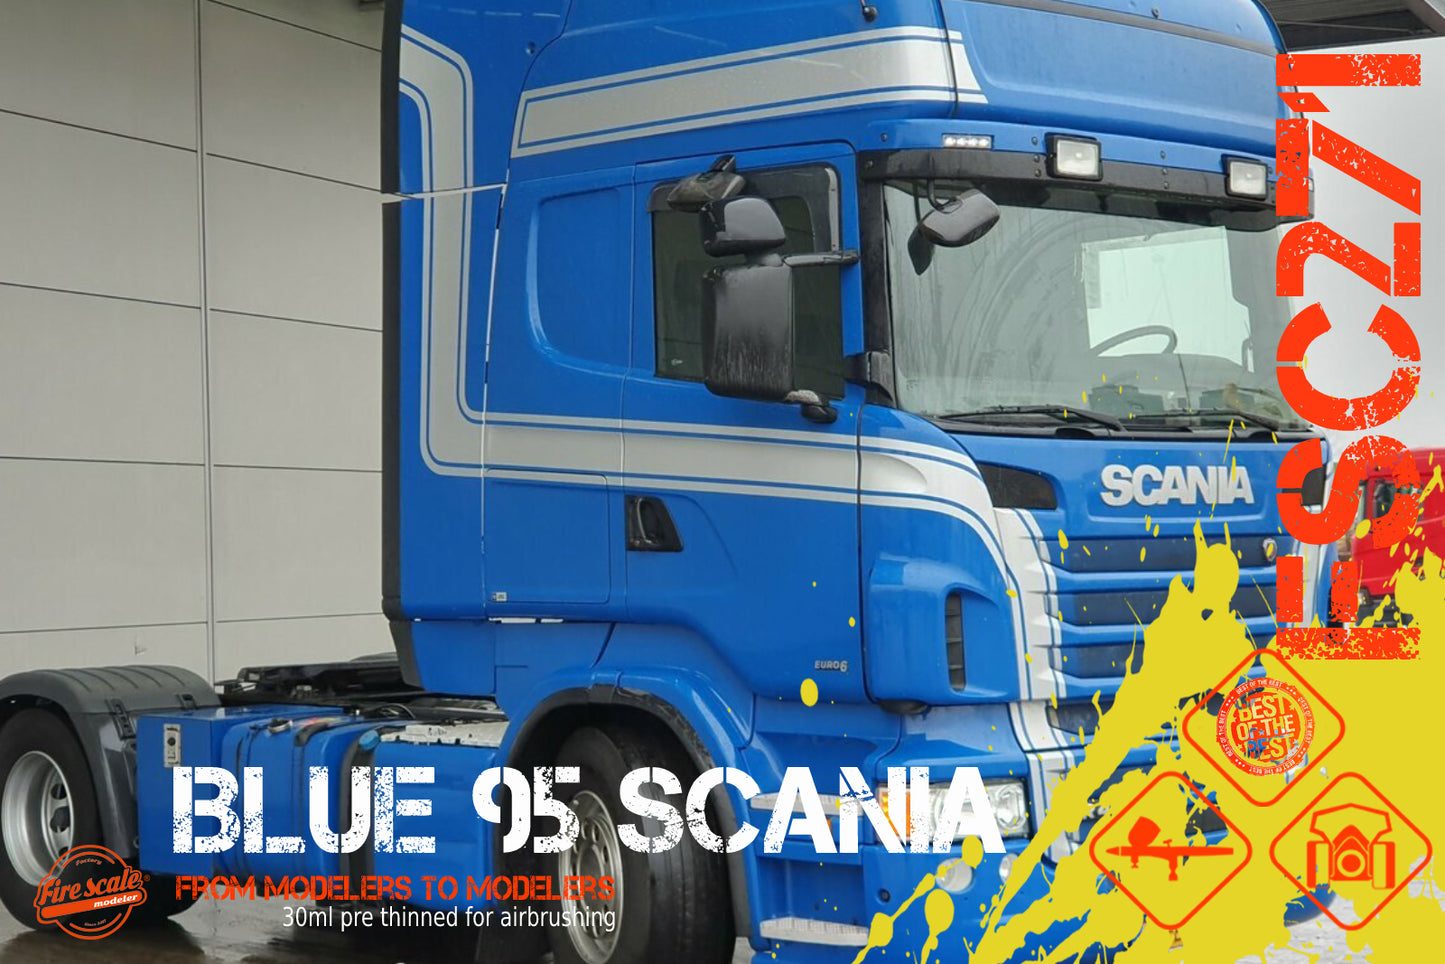 Blue 95 Scania